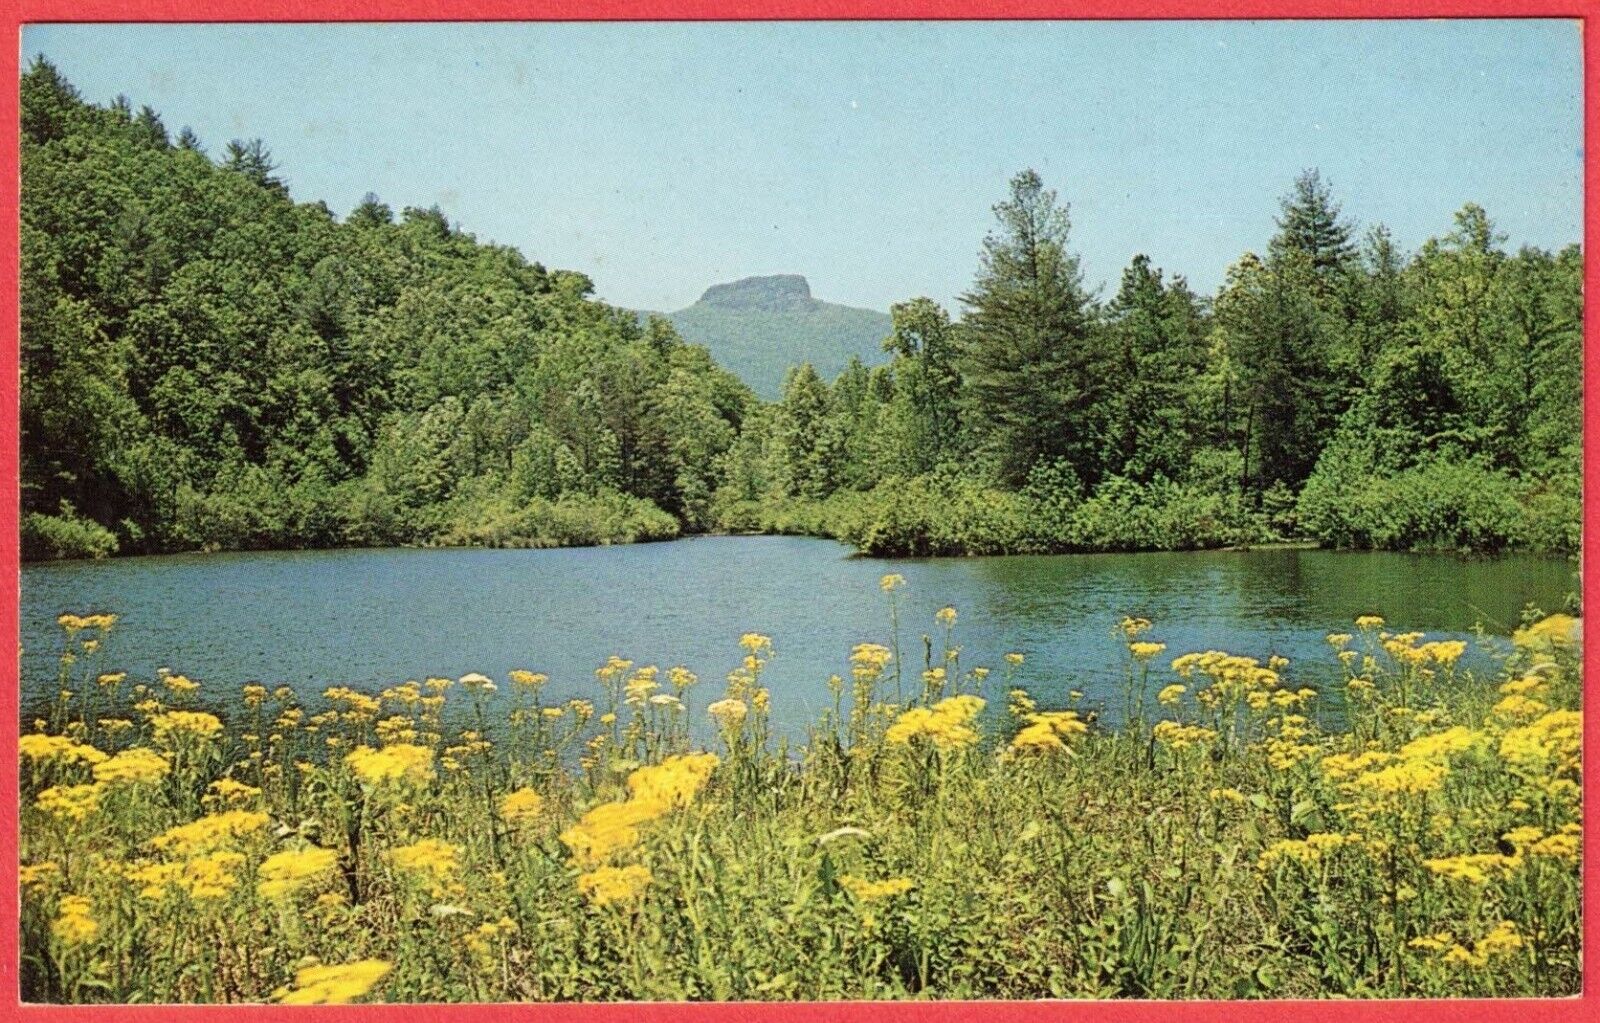 Table Rock River Lake Grove Flowers Western North Carolina NC 1950s Postcard